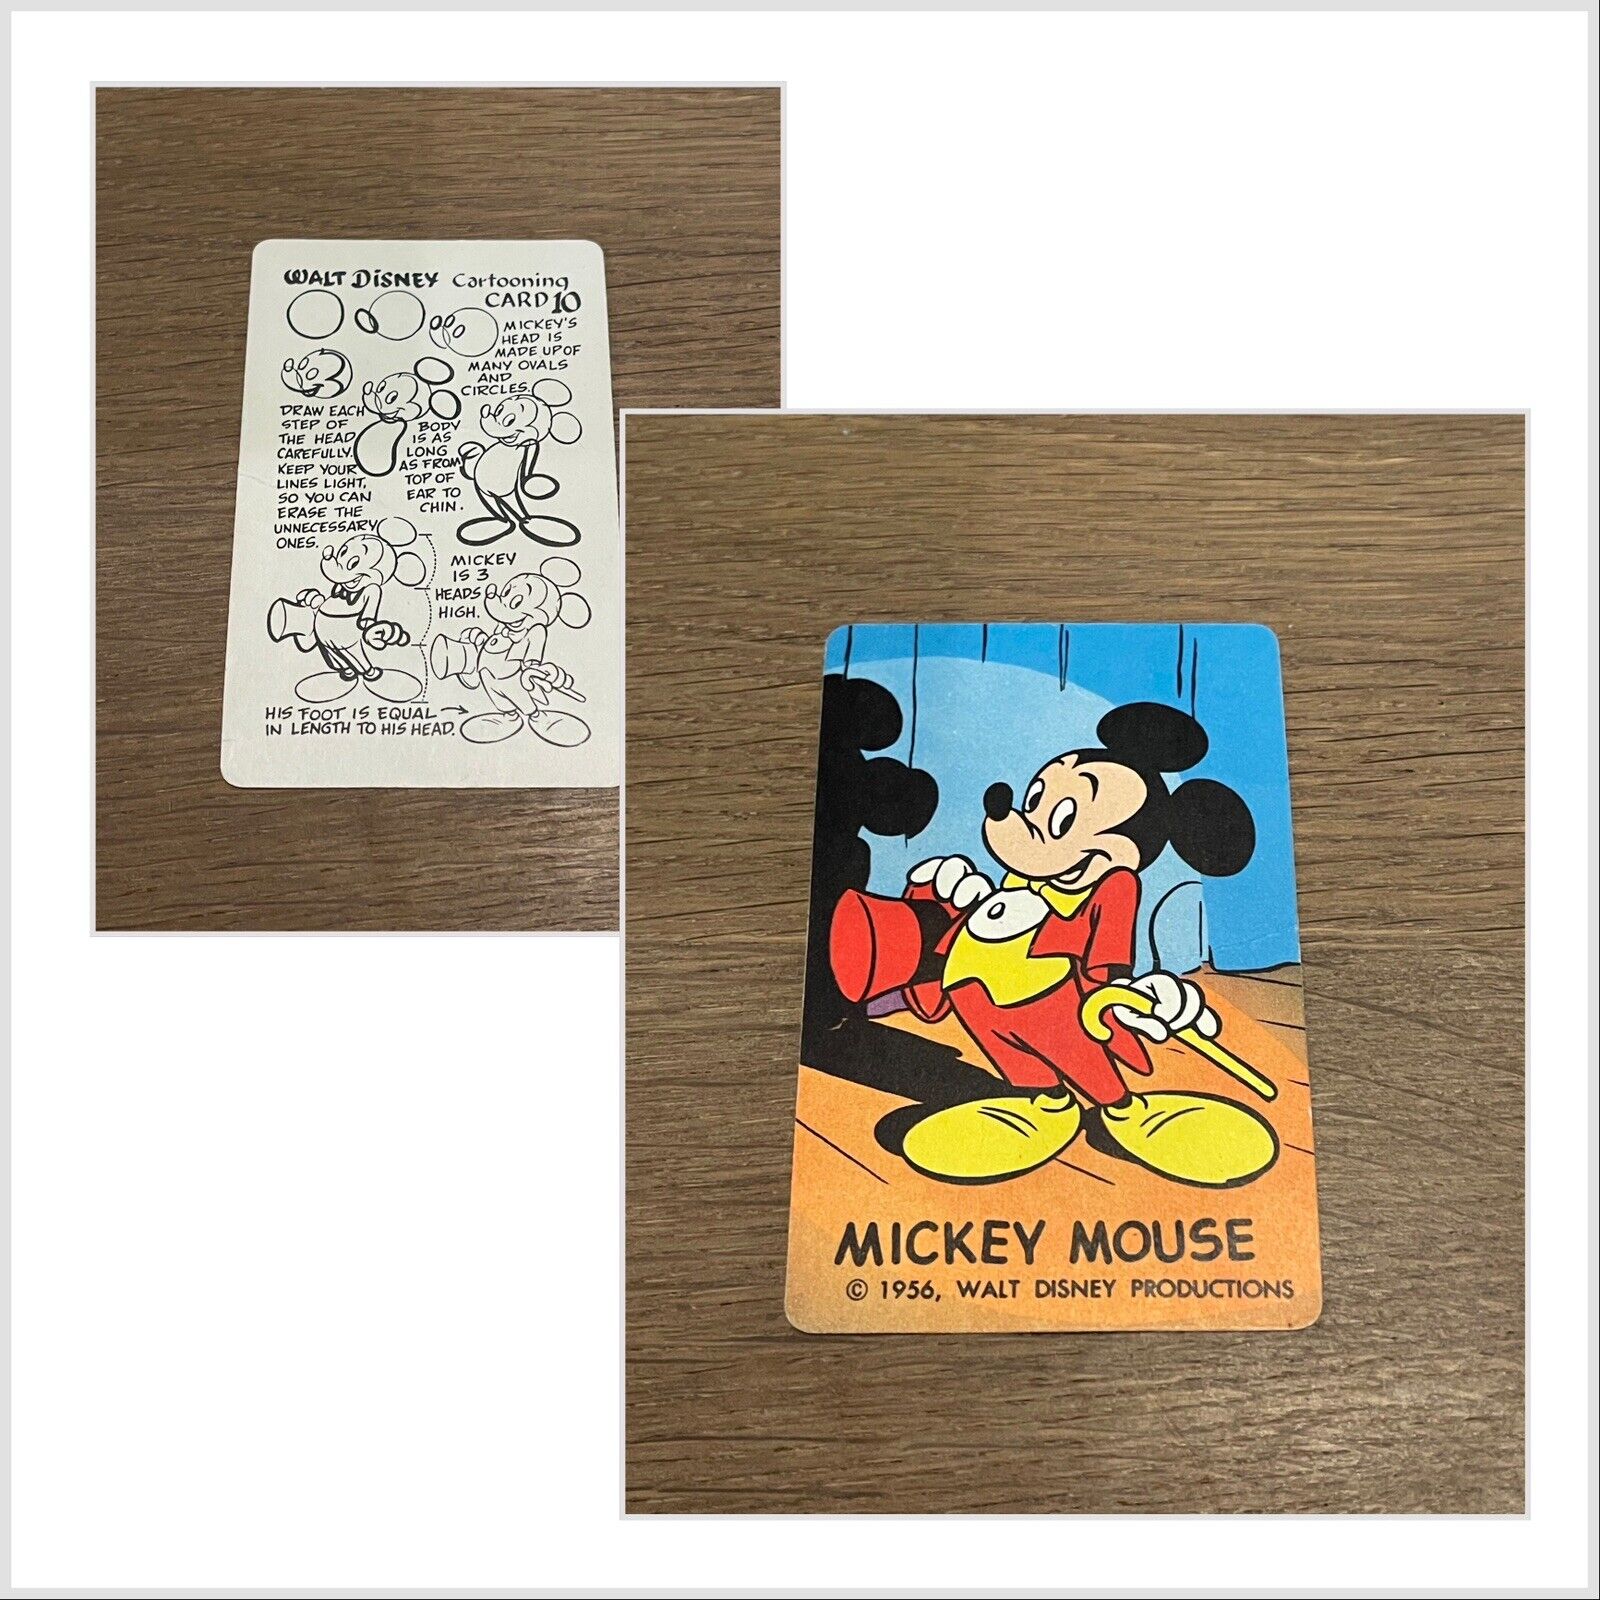 VINTAGE 1956 WALT DISNEY MICKEY MOUSE CARTOONING CARD EXTREMELY RARE DISNEY CARD